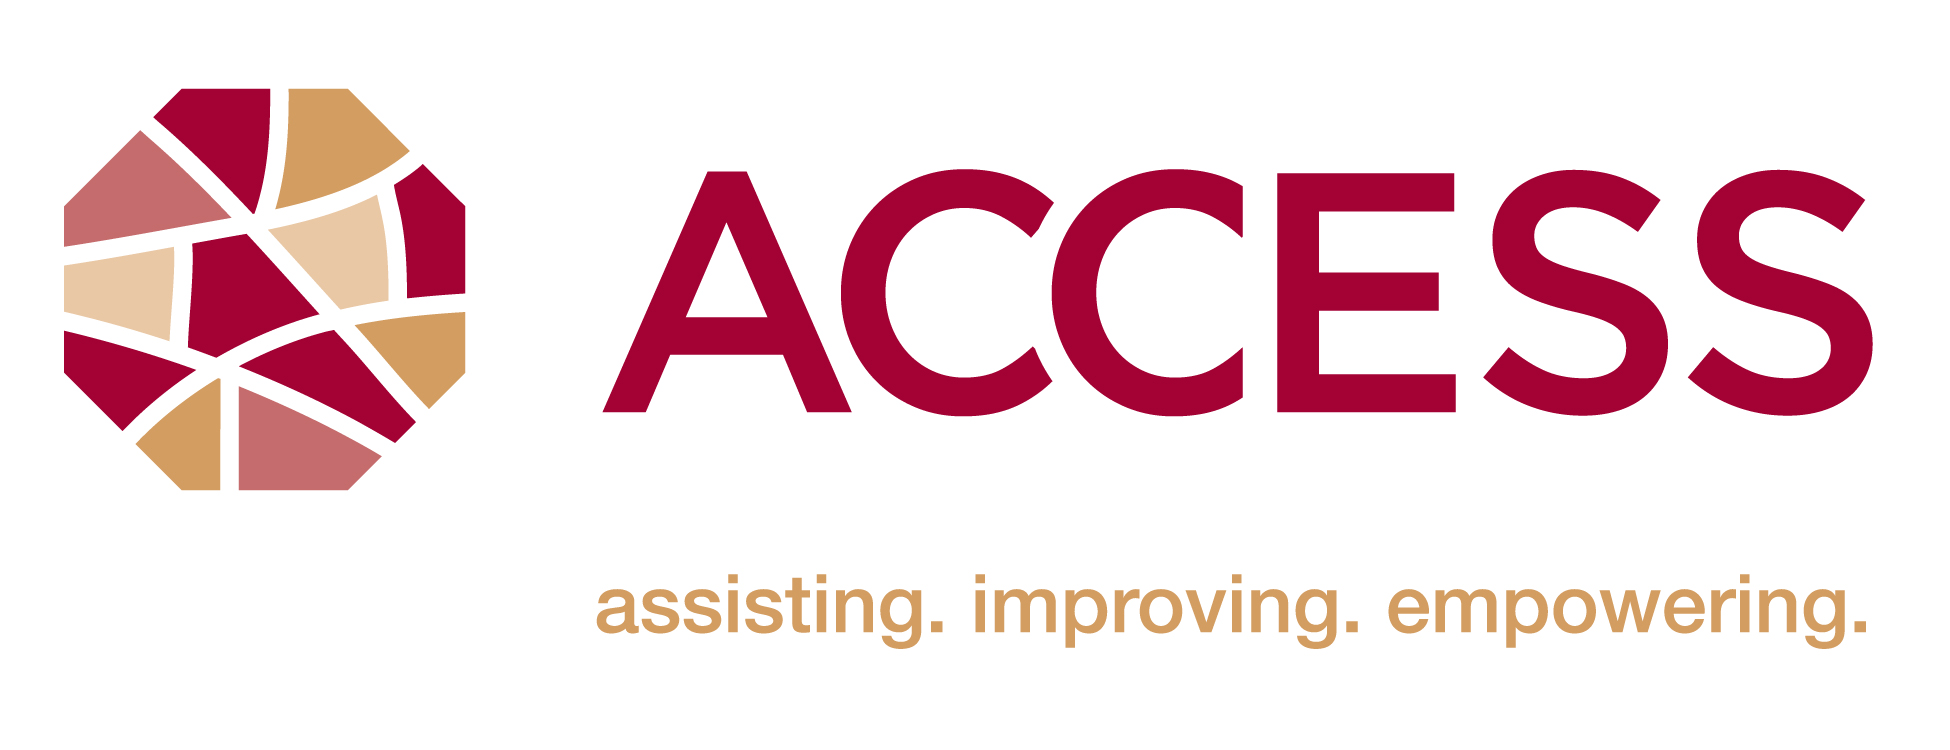 access_logo_tagline.jpg